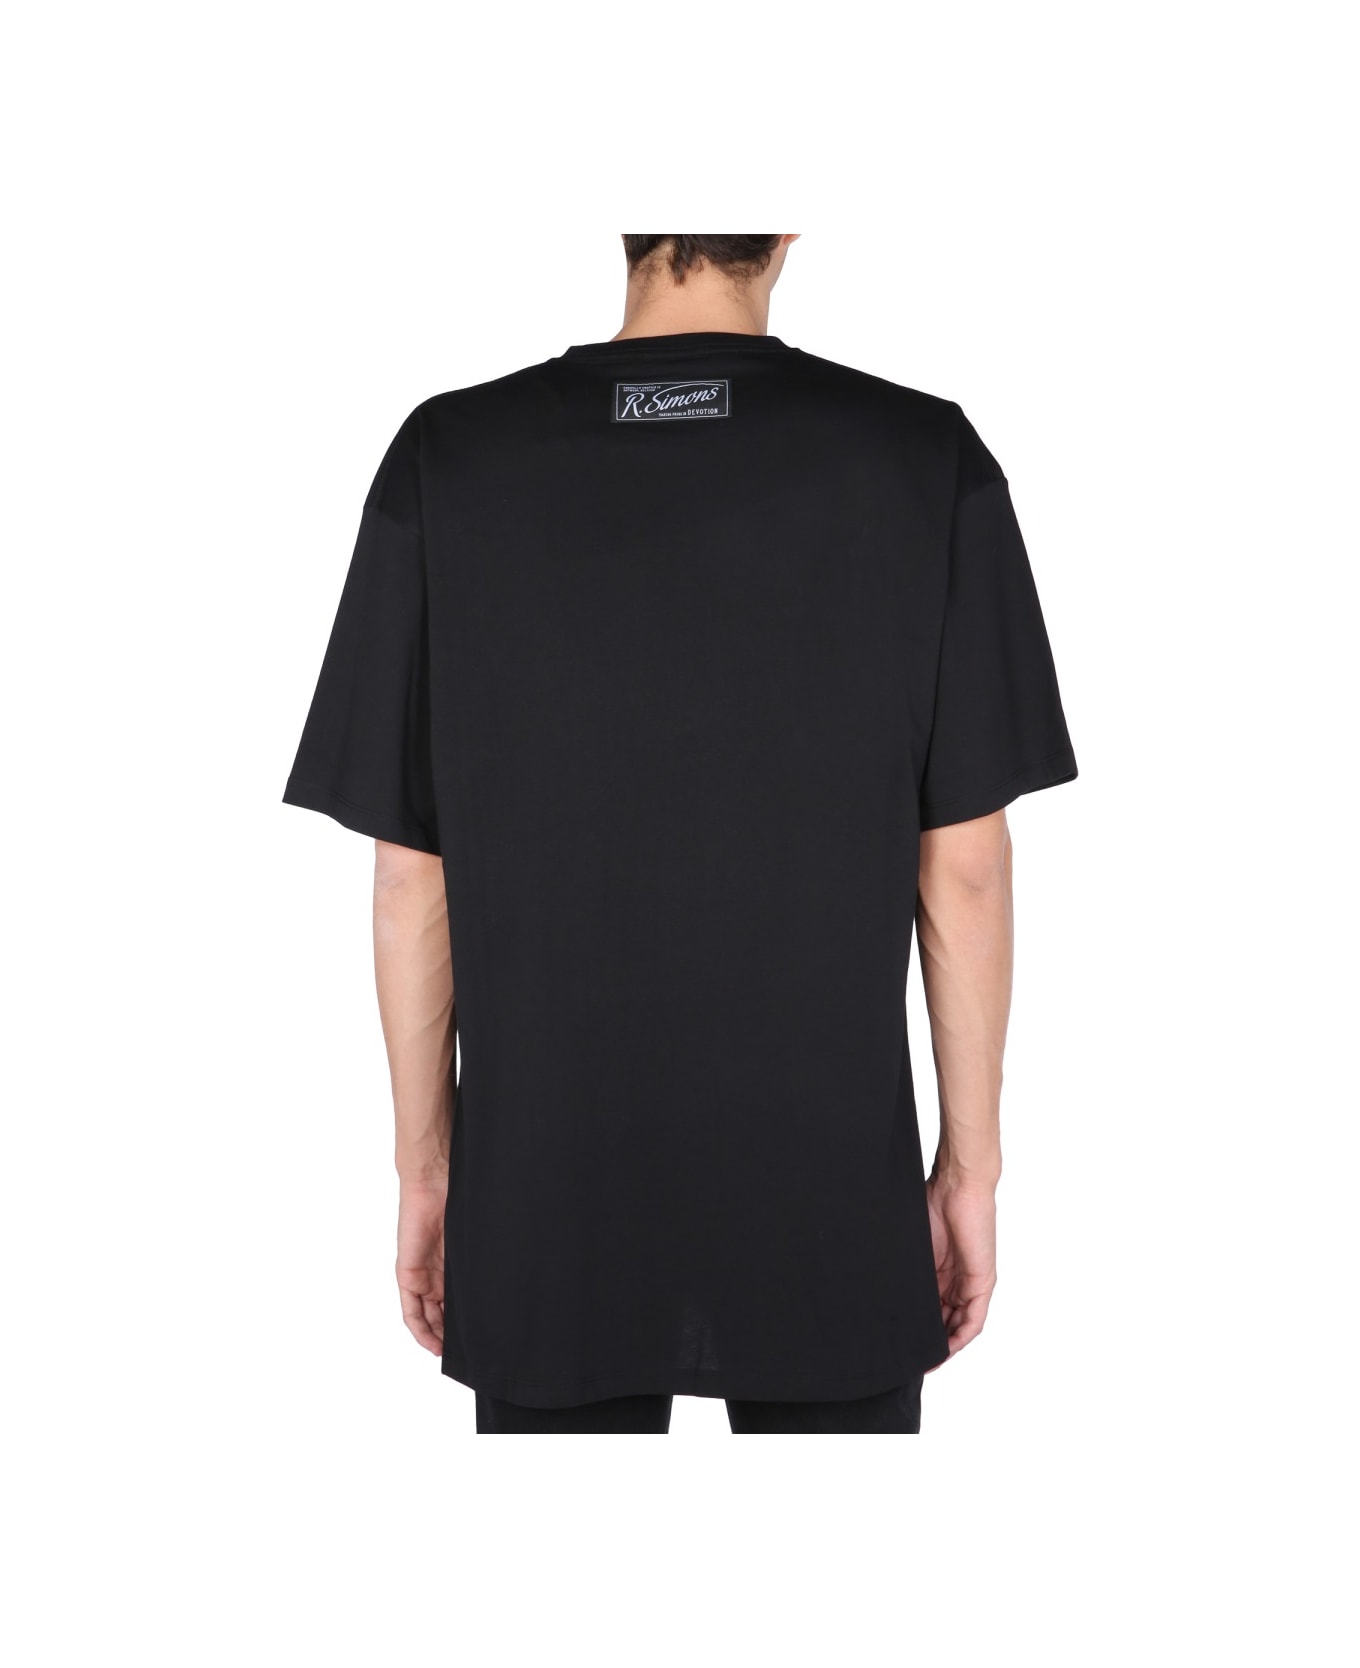 Raf Simons T-shirt With Printed Details - BLACK